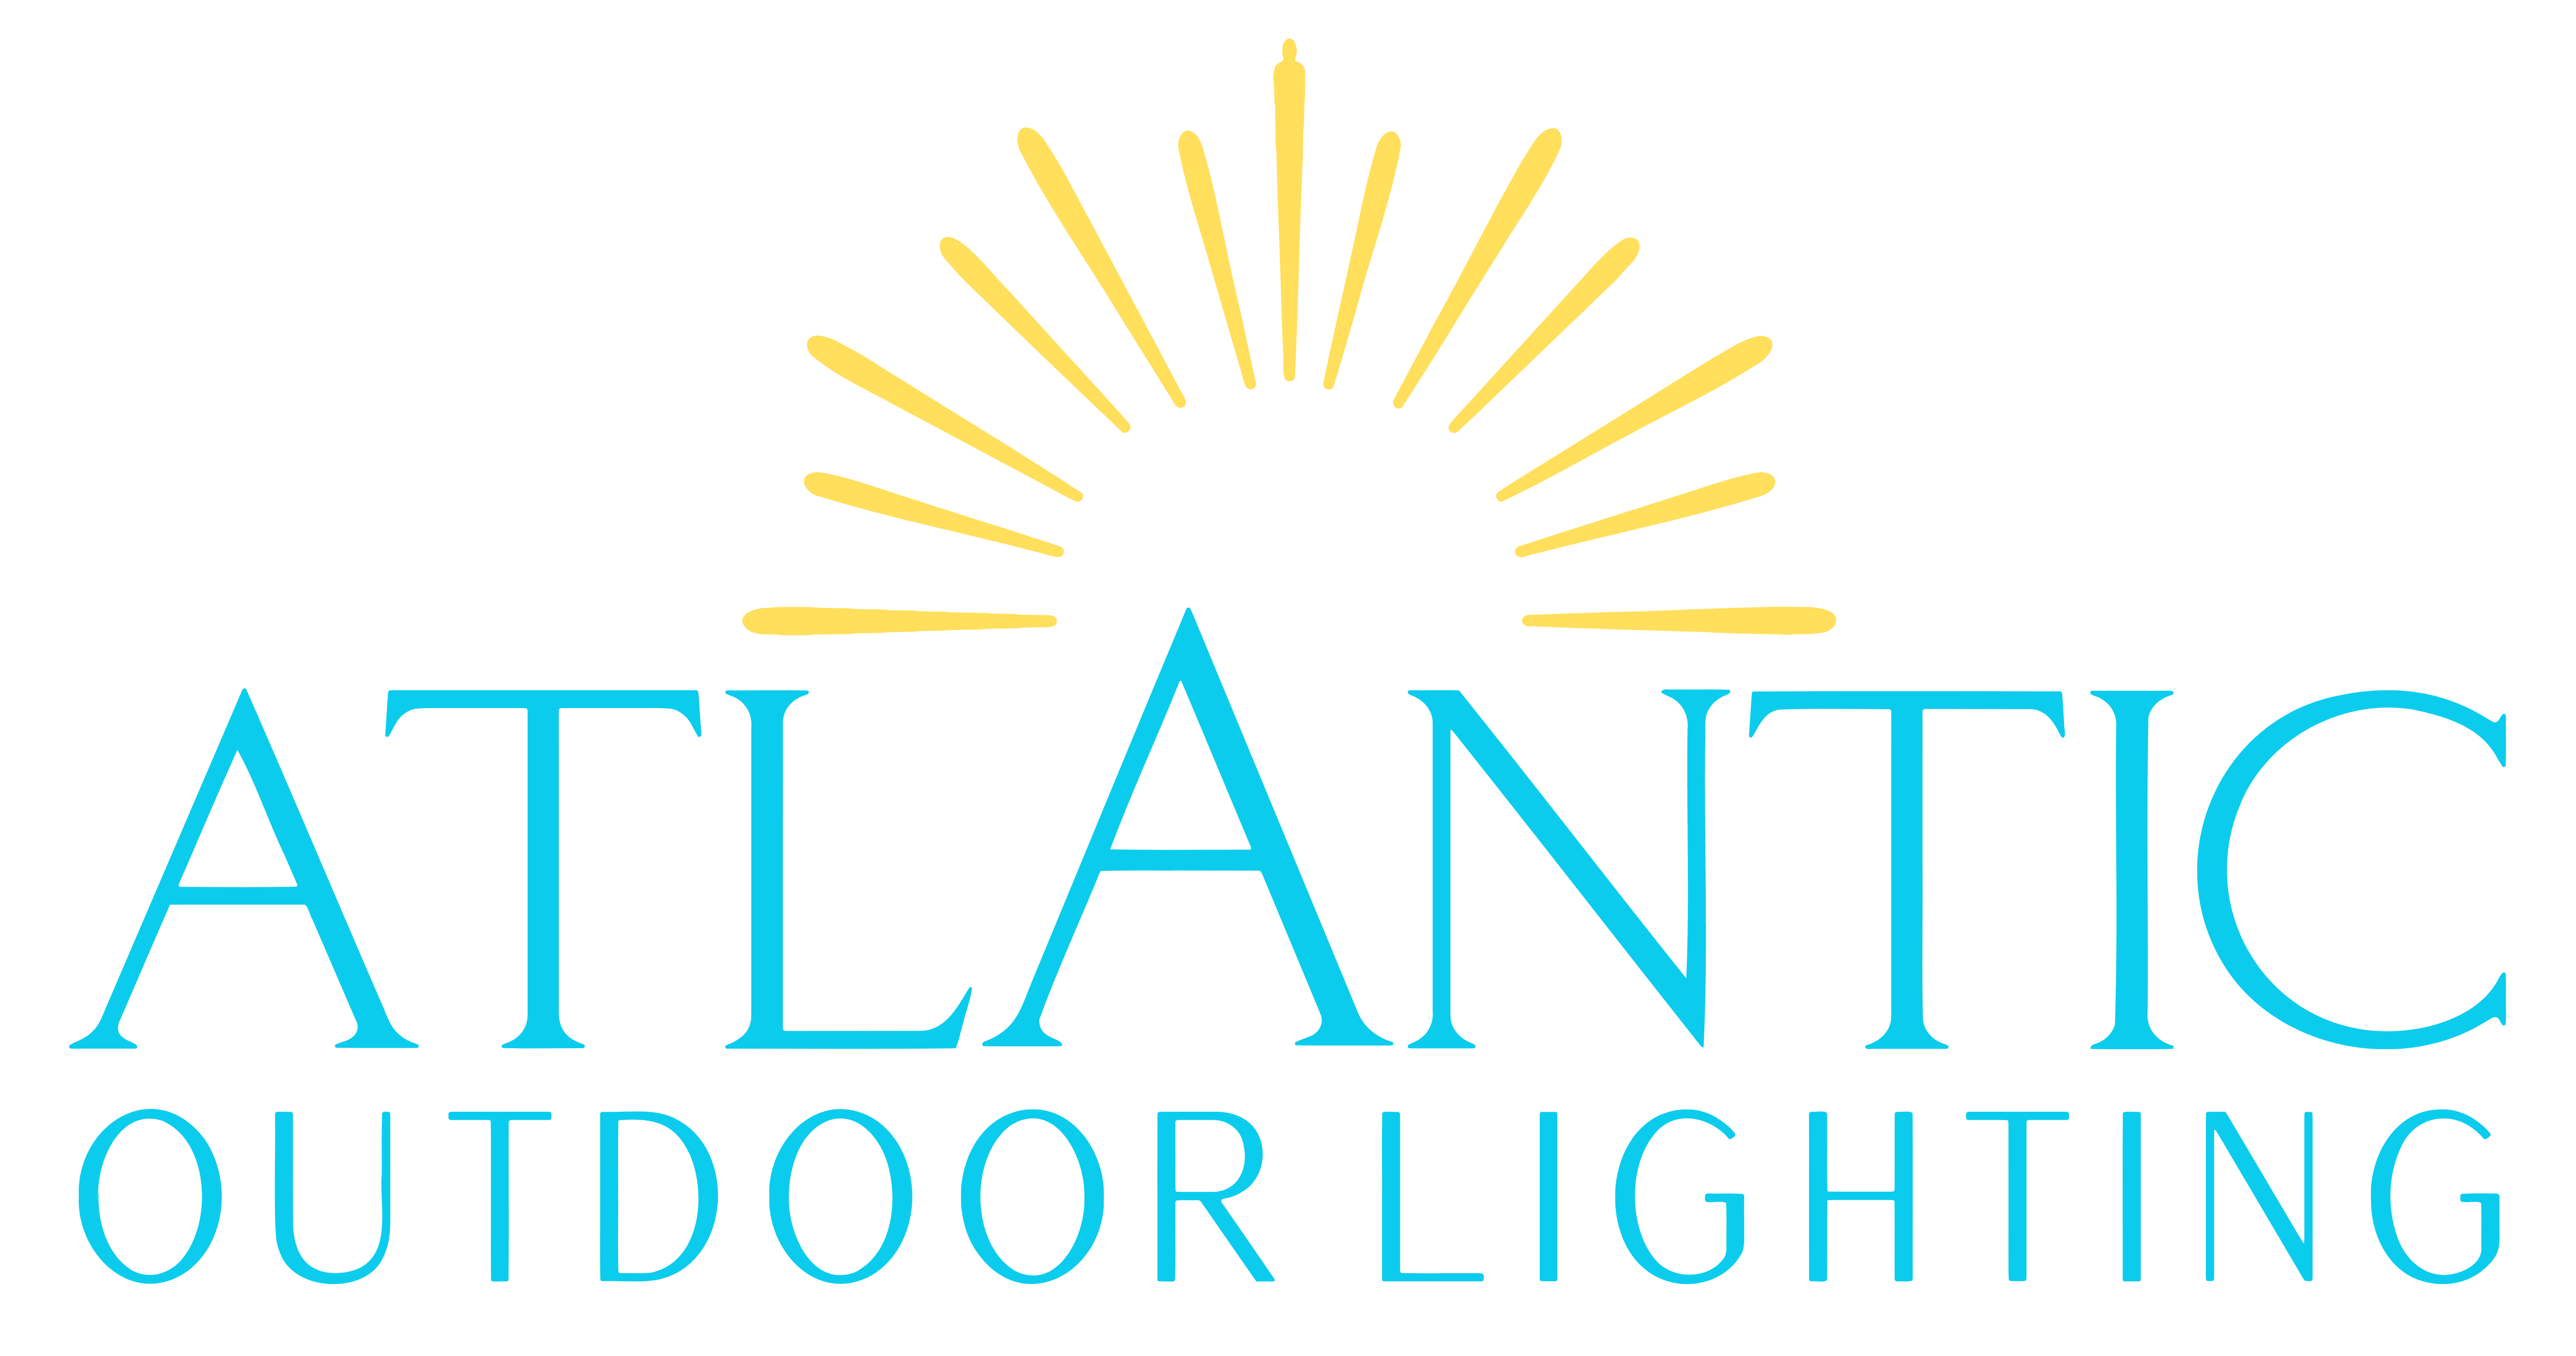 Atlantic Outdoor Lighting logo. Yellow sunburst and aqua text.